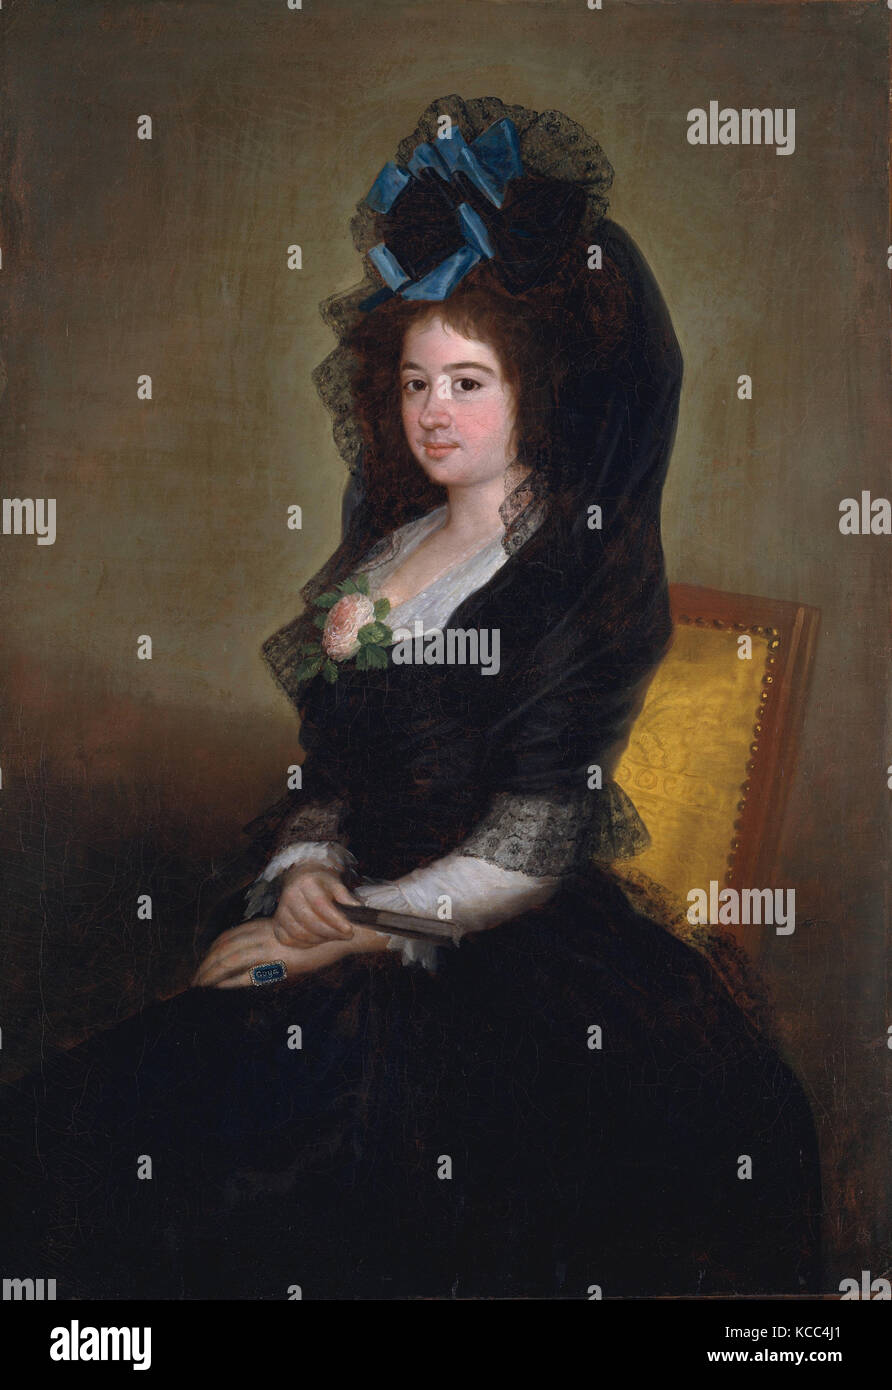 Narcisa Barañana de Goicoechea, atribuido a Goya Foto de stock